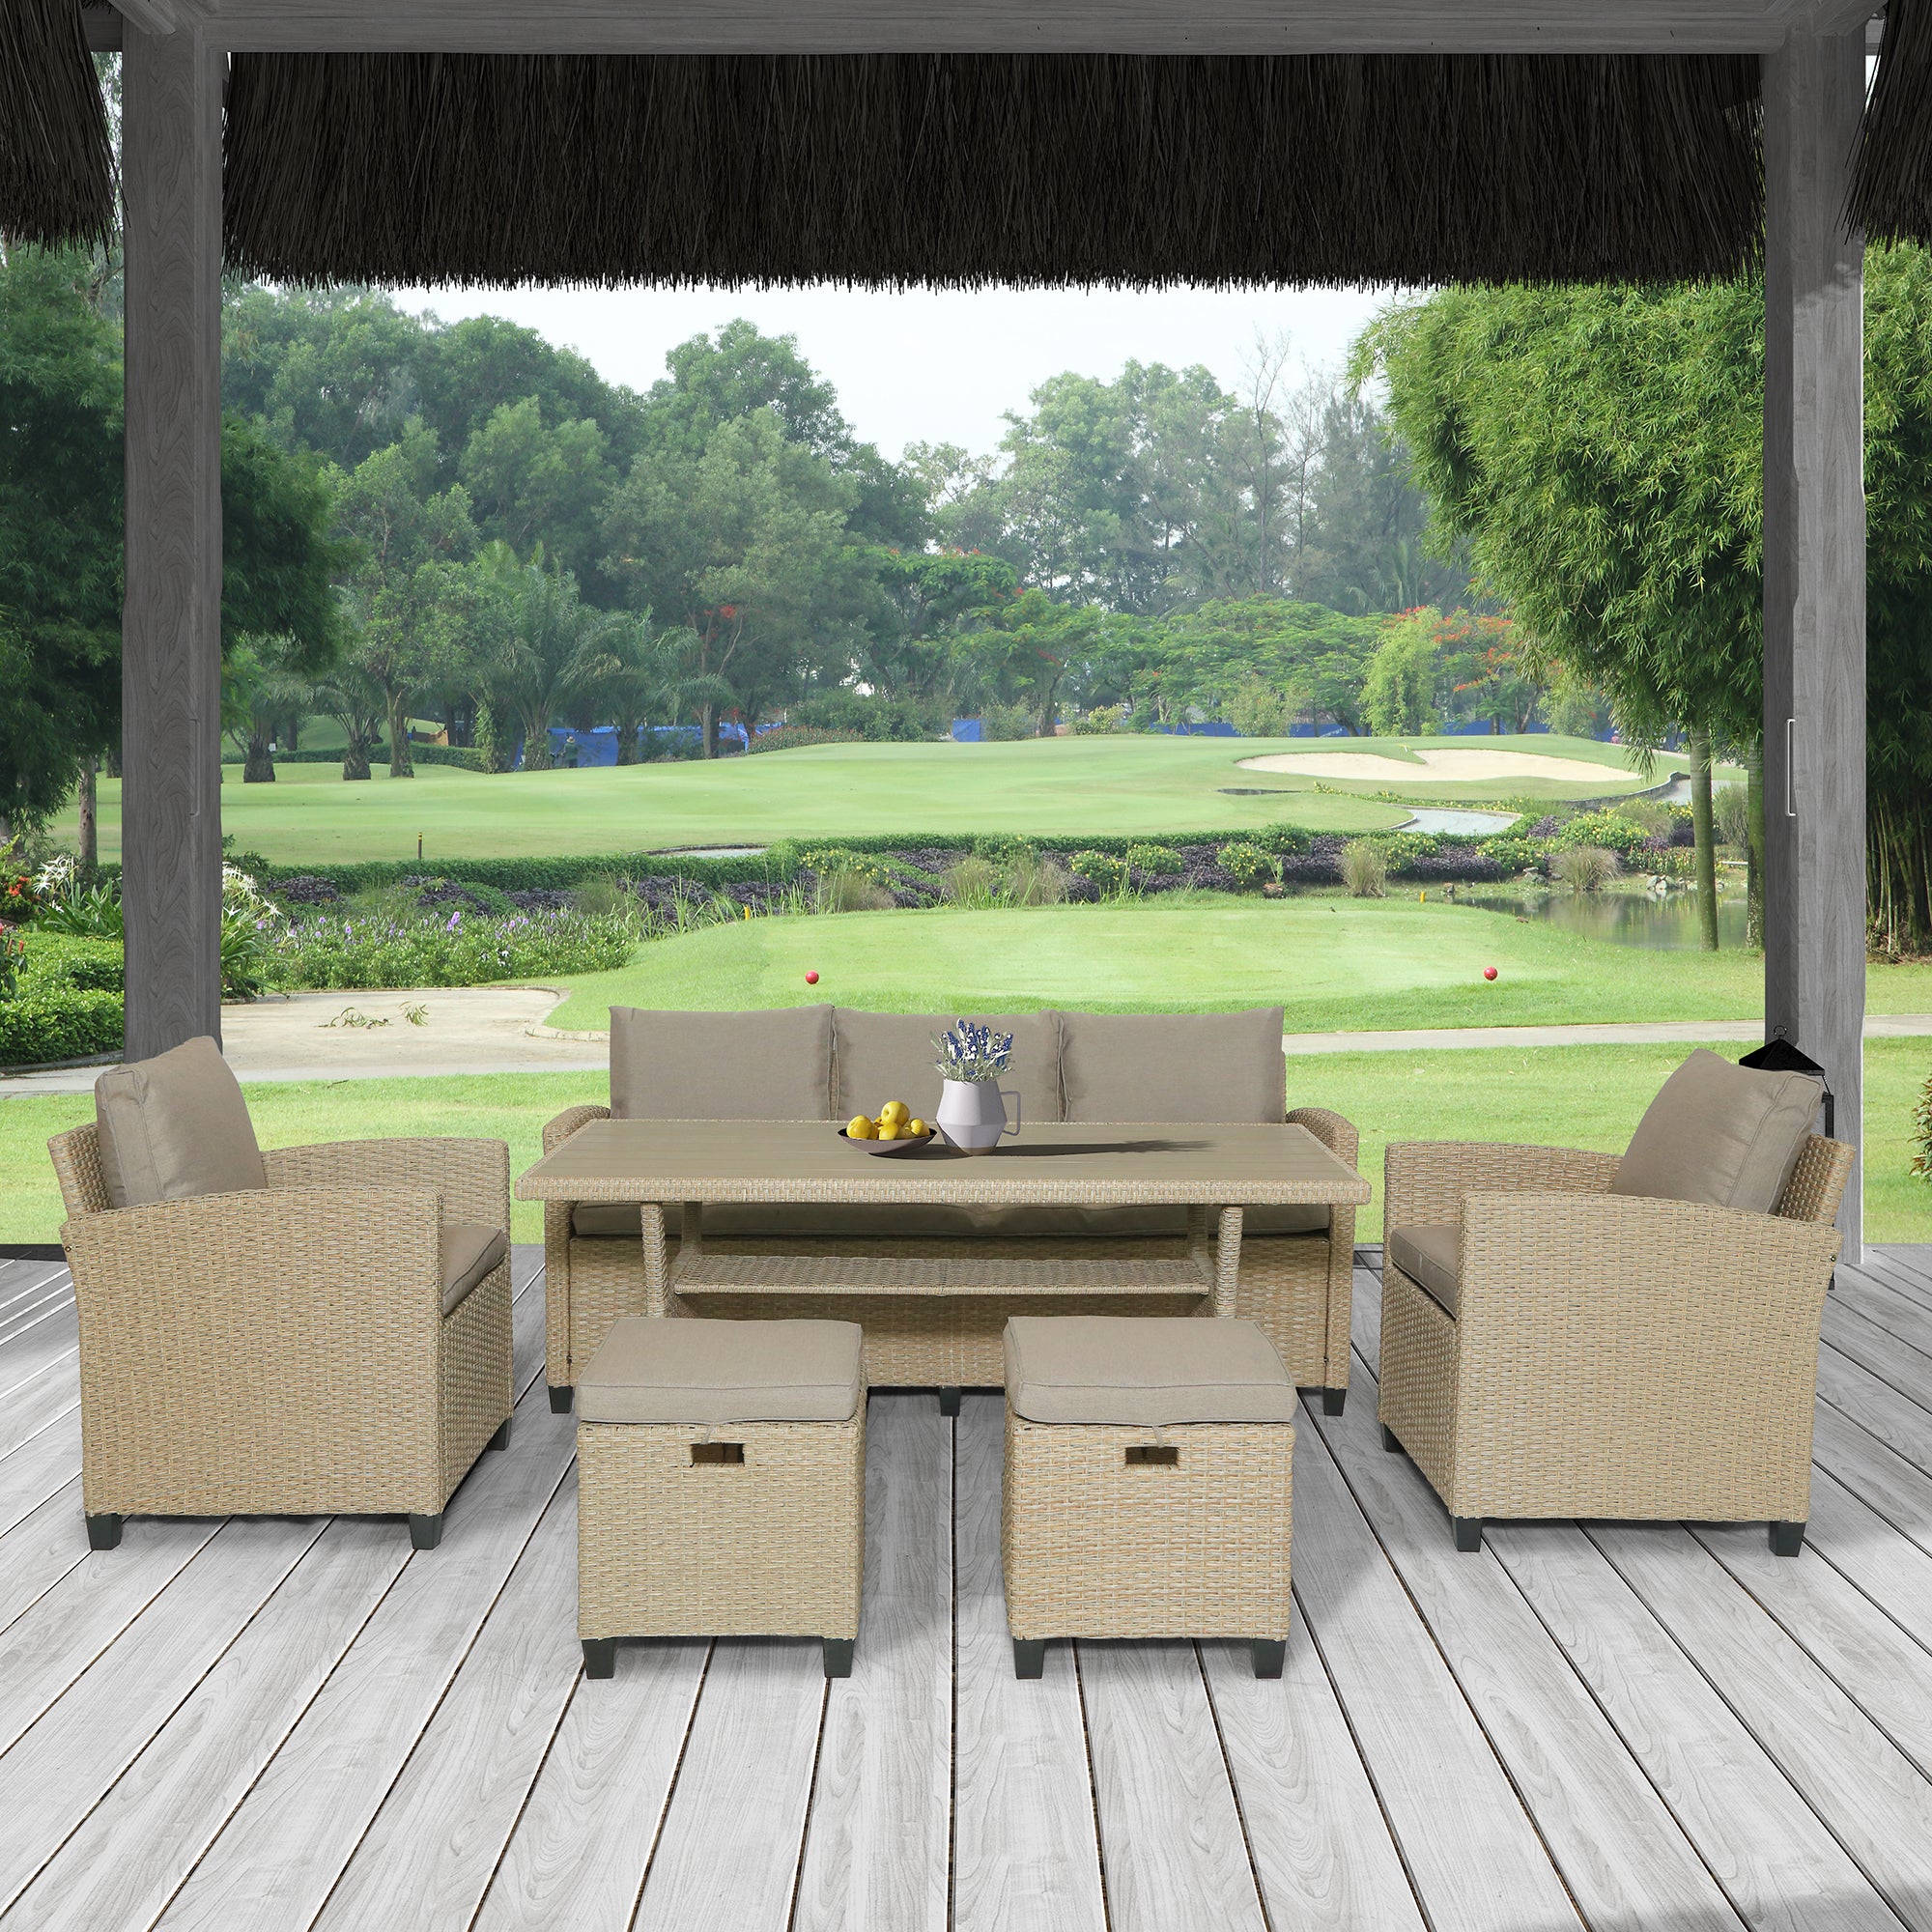 6 Piece Outdoor Rattan Wicker Set Patio Garden Backyard Sofa, Chair, Stools and Table - Brown